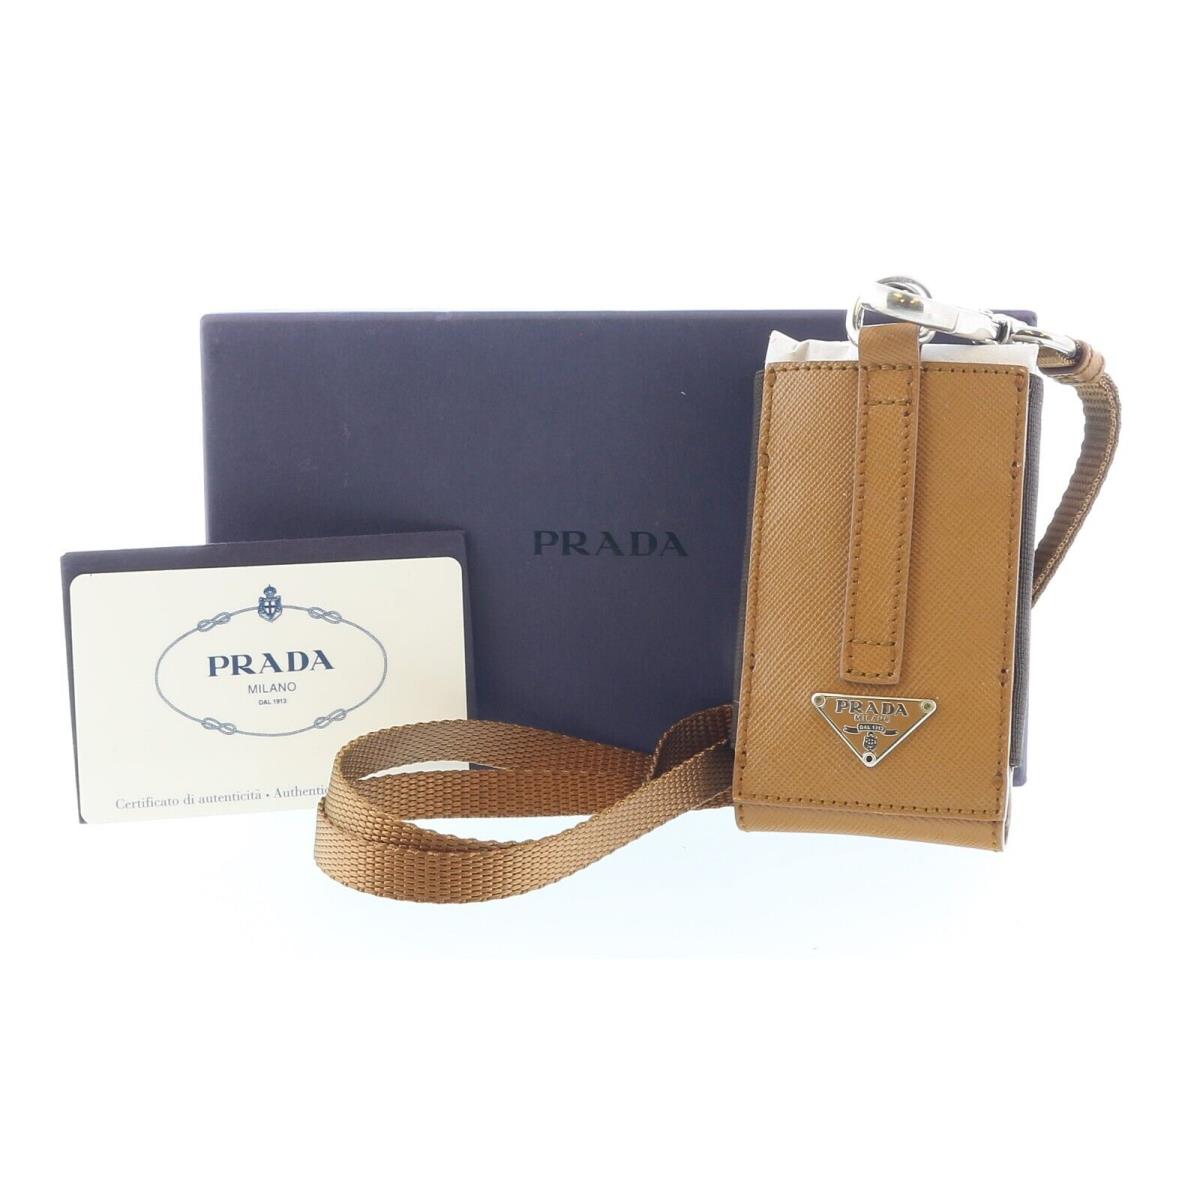 Prada Light Brown Leather Signature Ipod Case Accessory Bag Charm